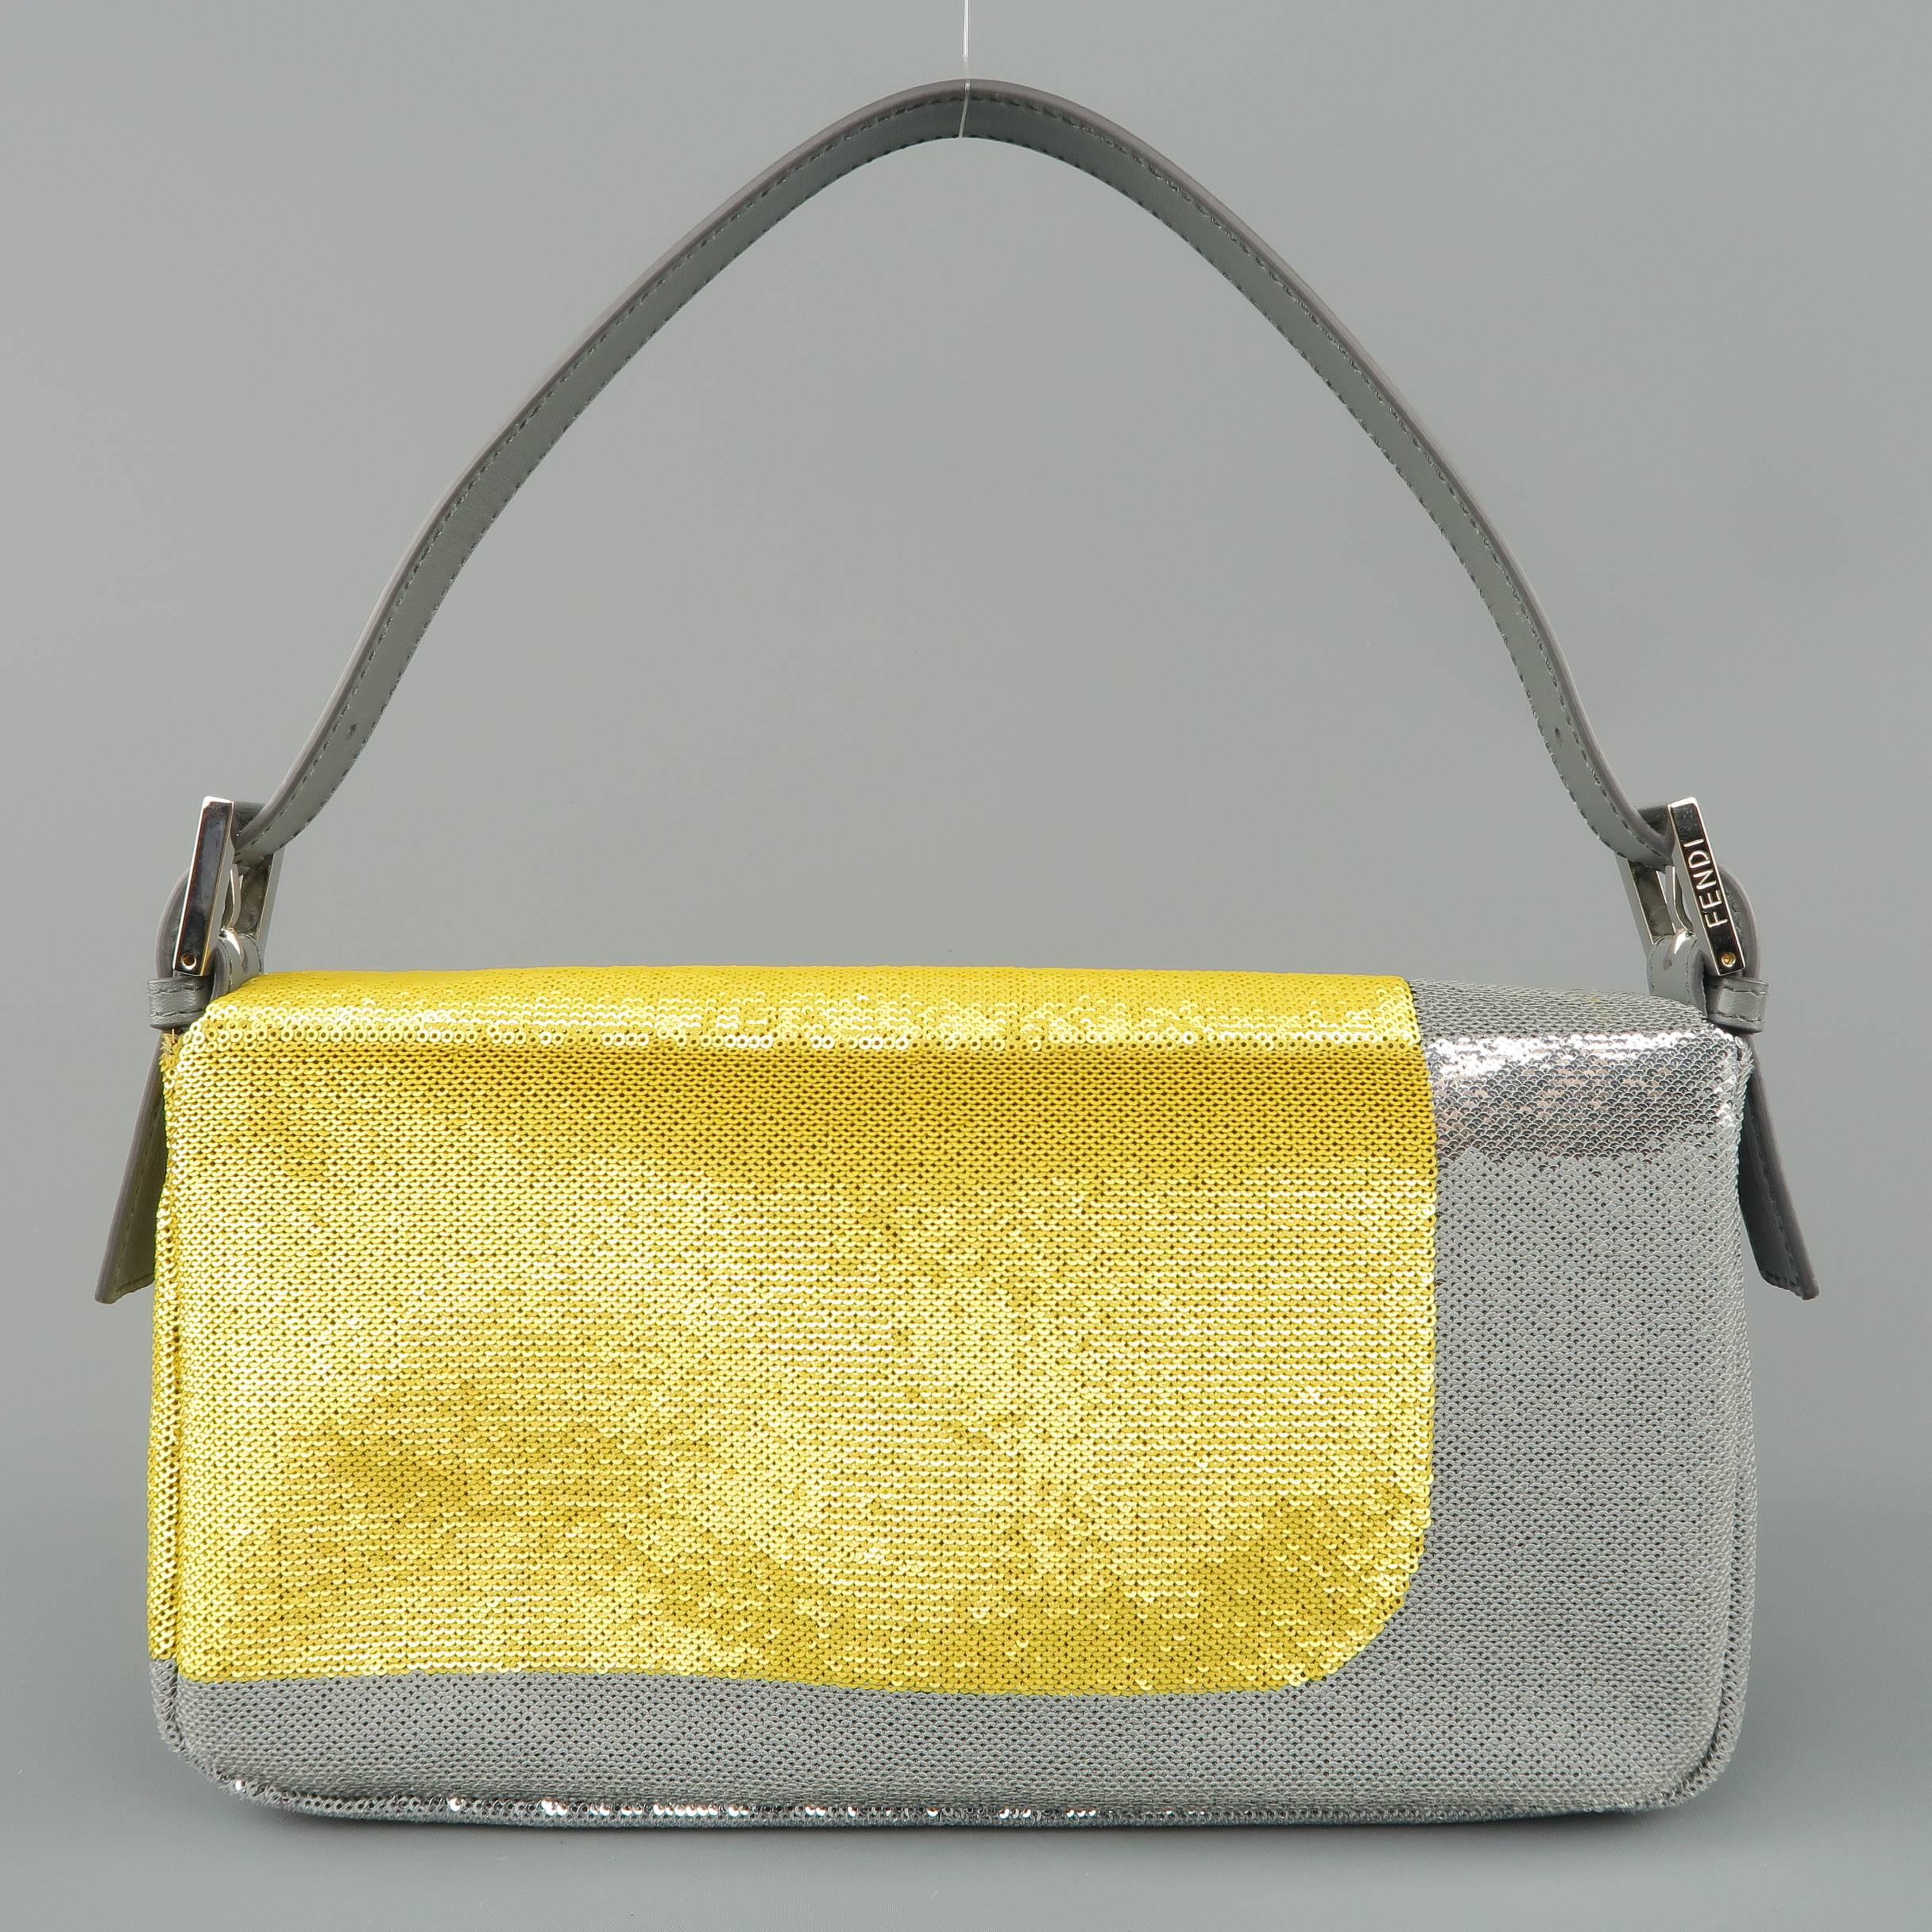 Beige Fendi Gold Silver and Bronze Color Block Sequined Baguette Handbag